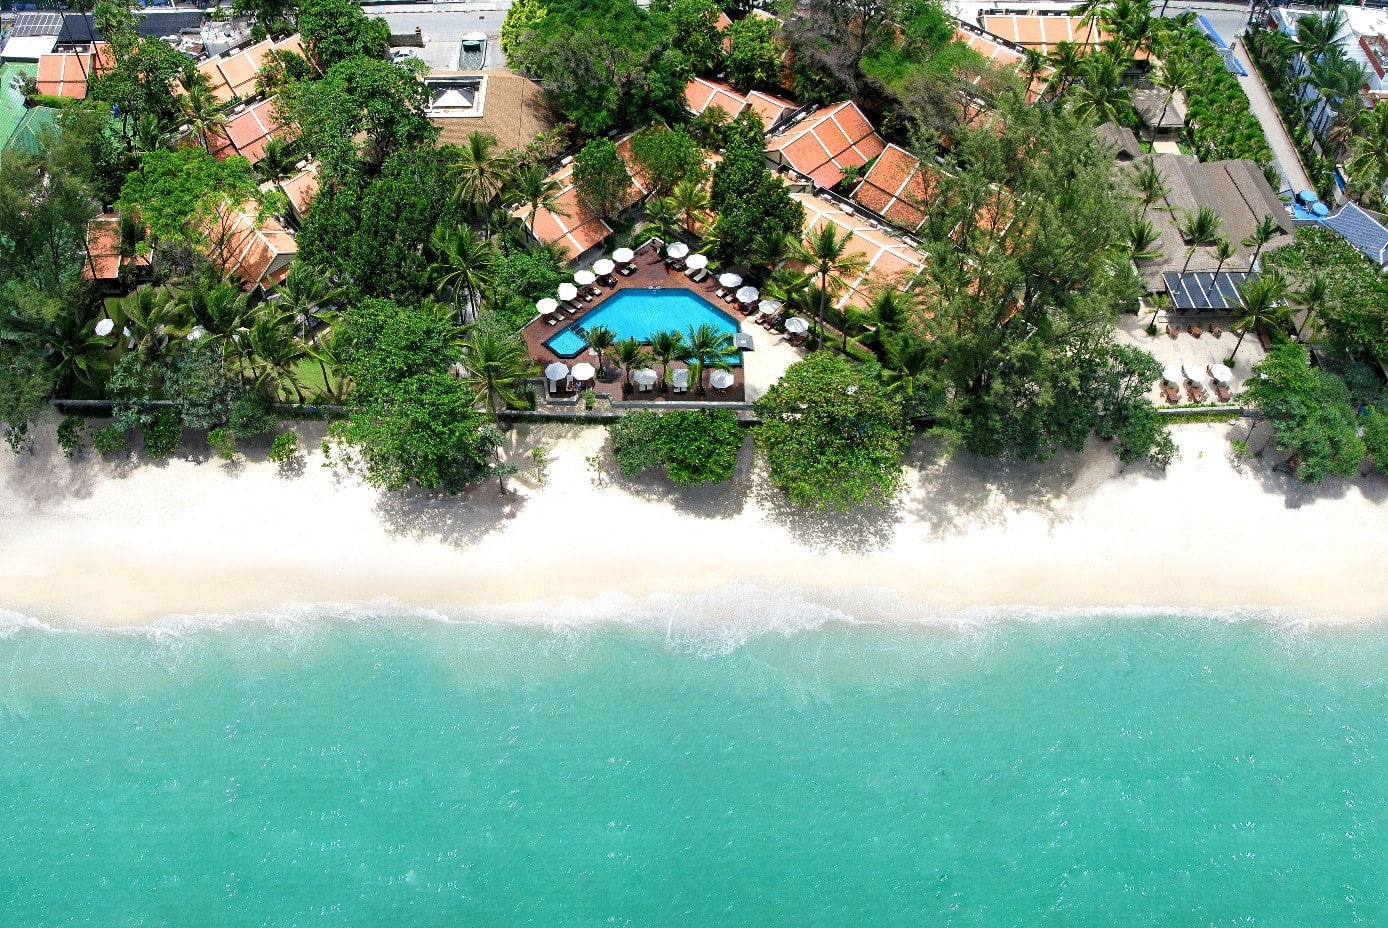 Impiana Resort Patong from above